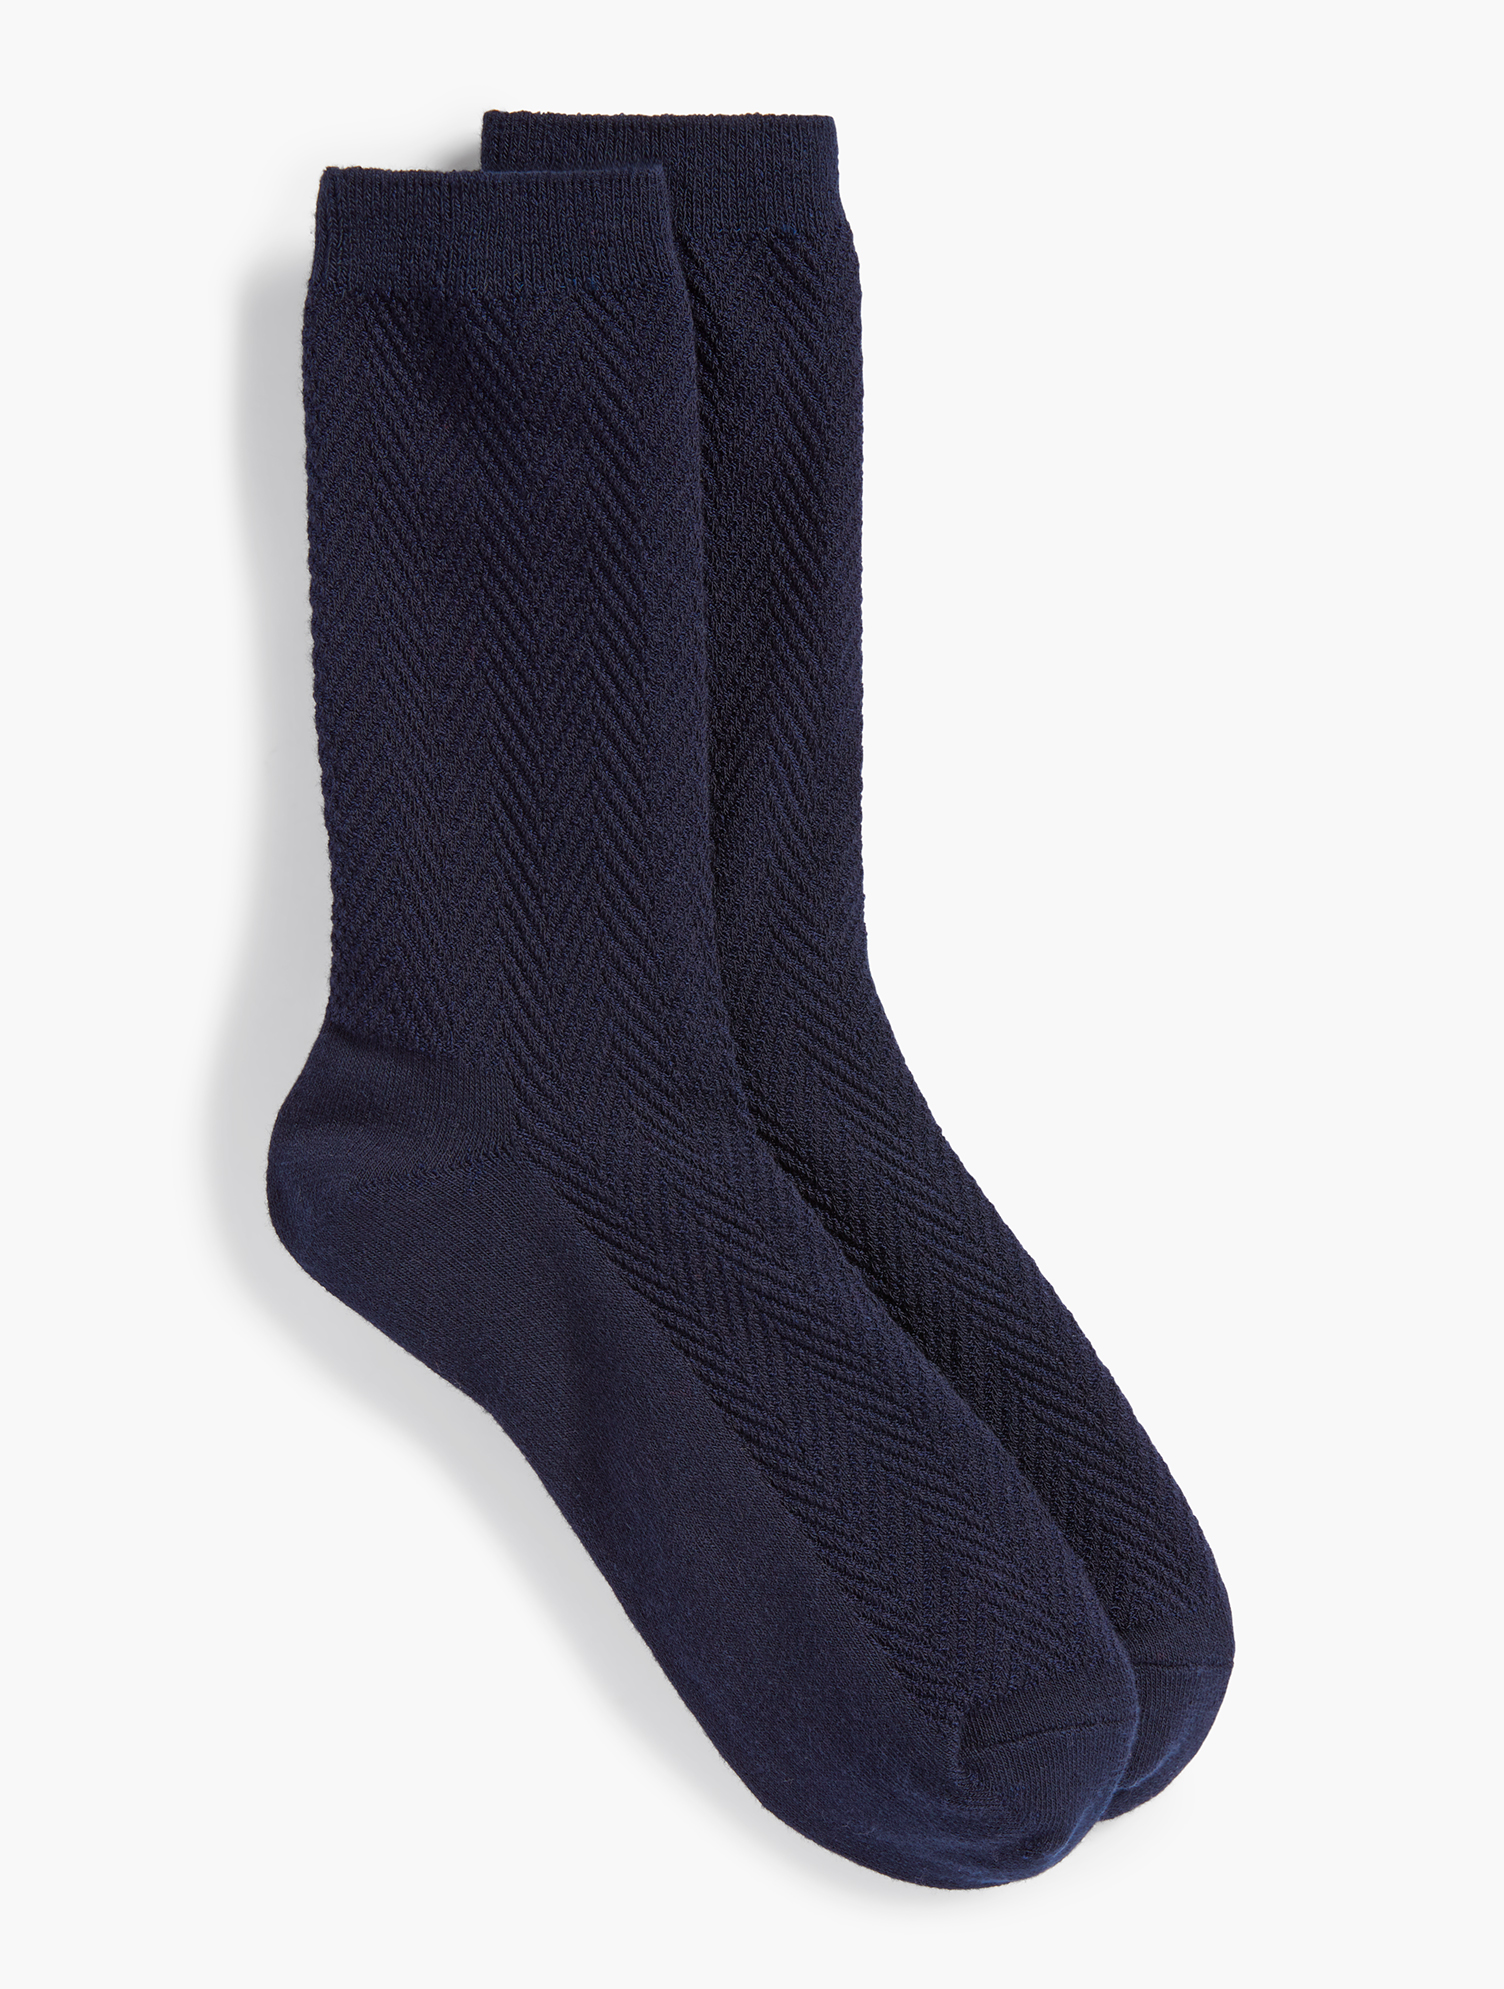 Talbots Chevron Trouser Socks - Navy Blue - 001